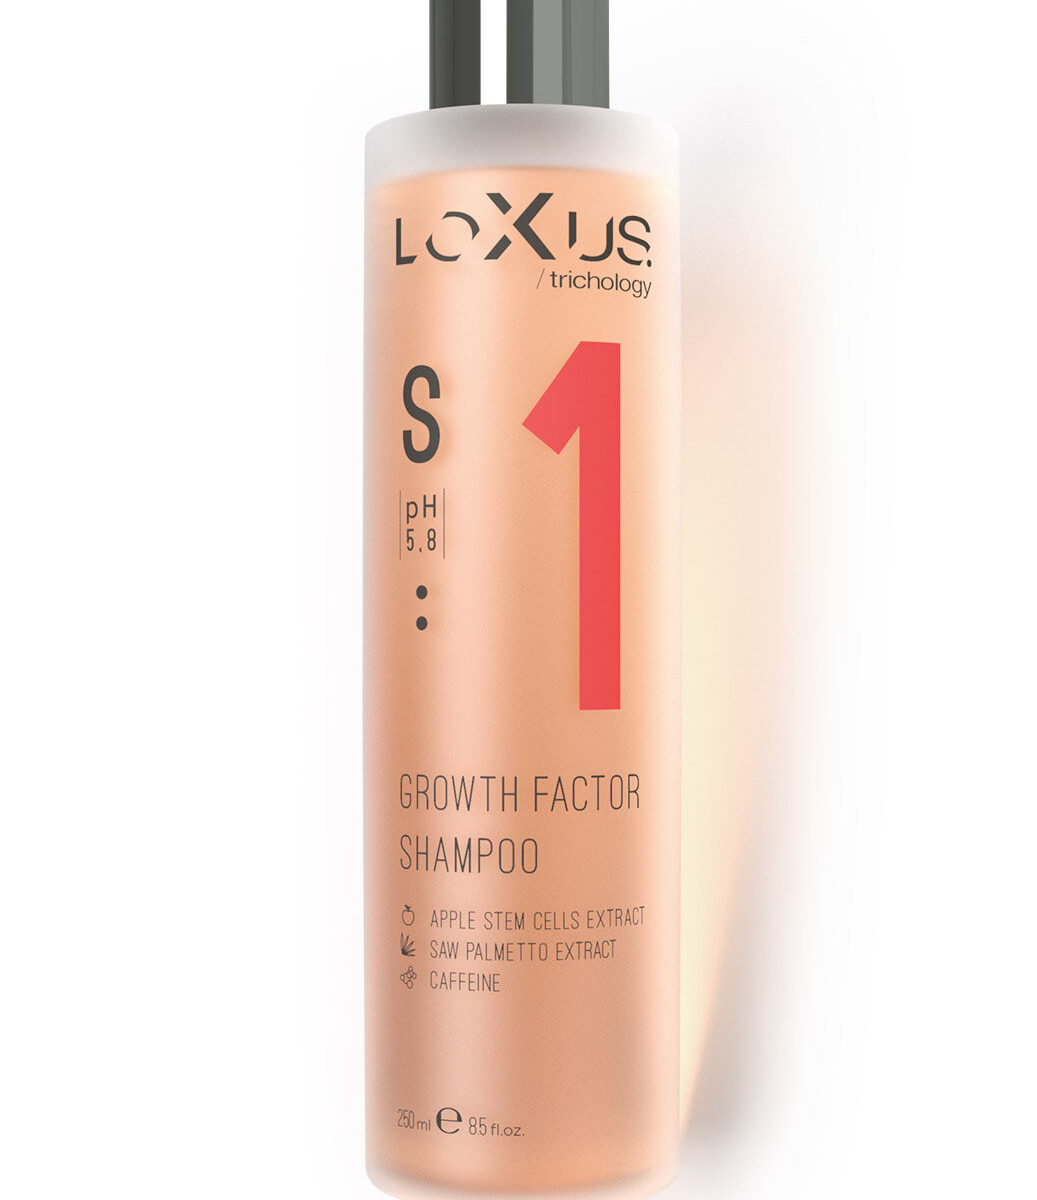 loxus-s1-growth-factor-shampoo-250ml